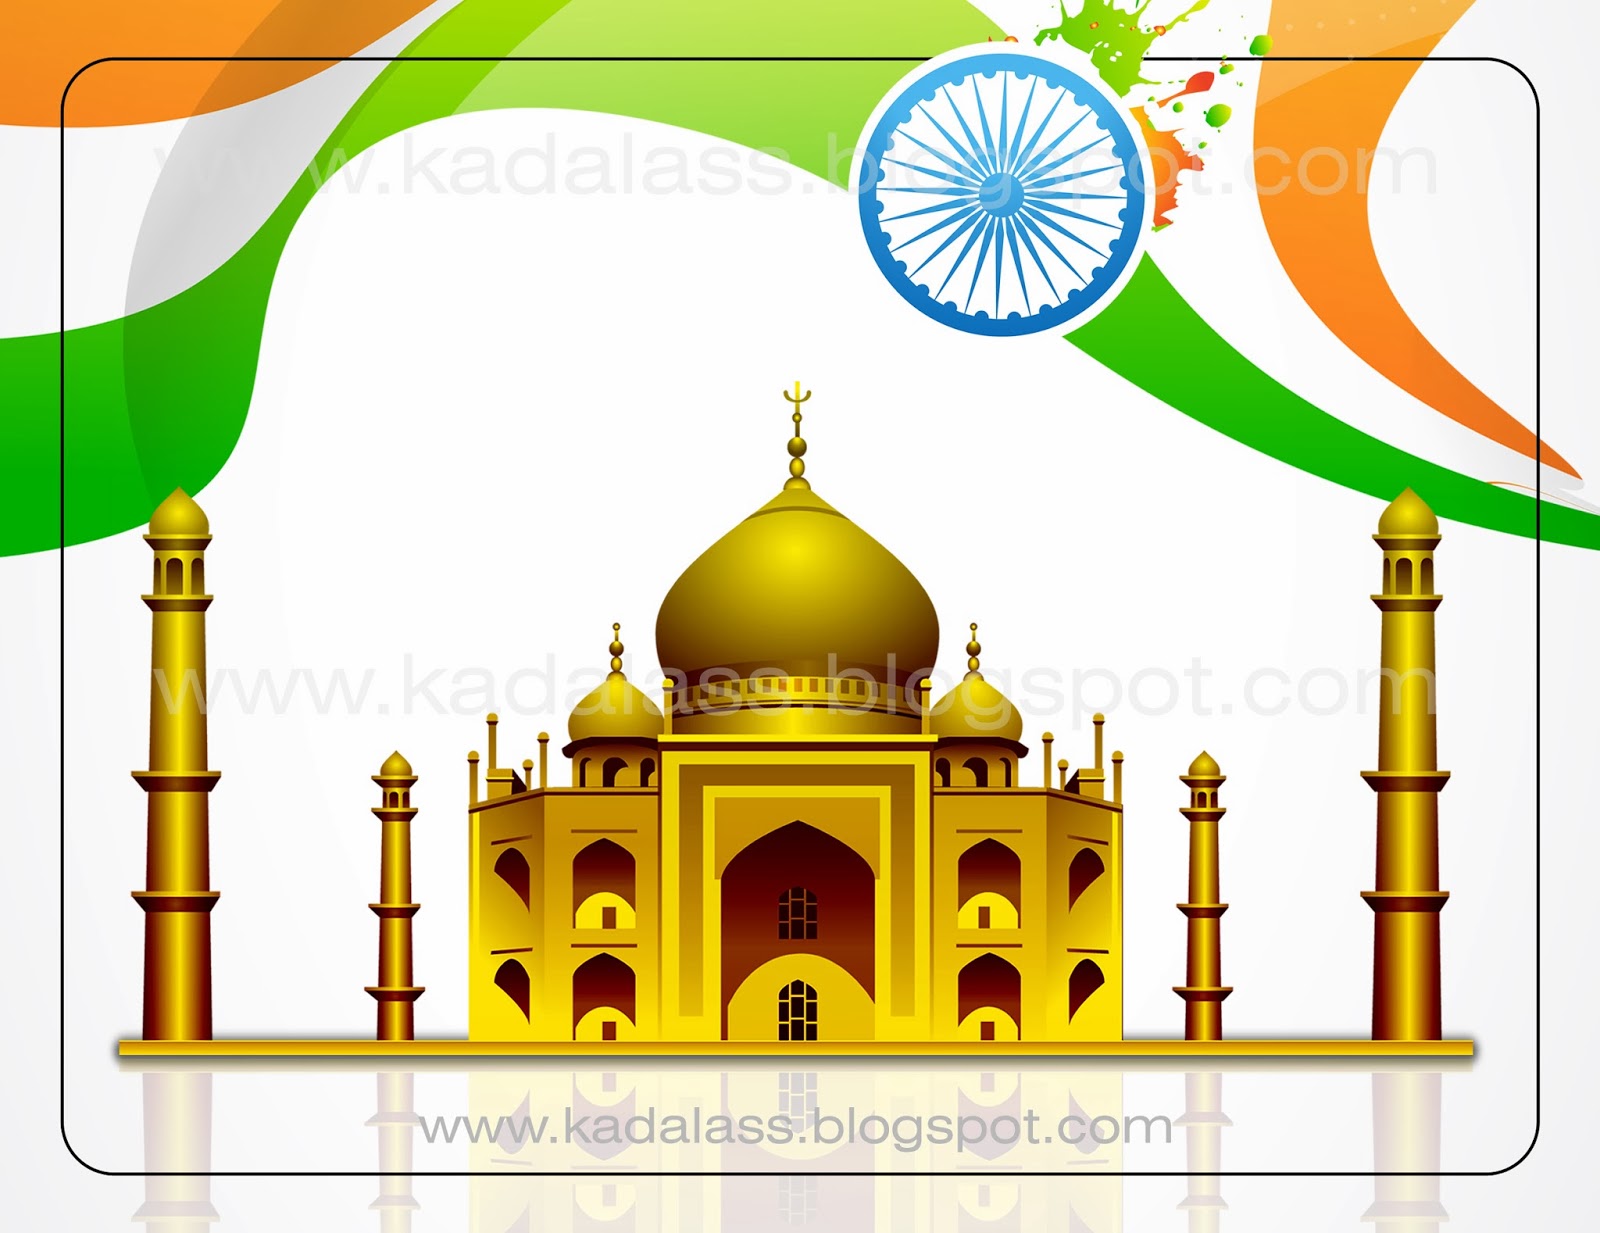 Muhammed Kunhi Wandoor, India, Republic Day, Indian Republic, Independence day, kerala